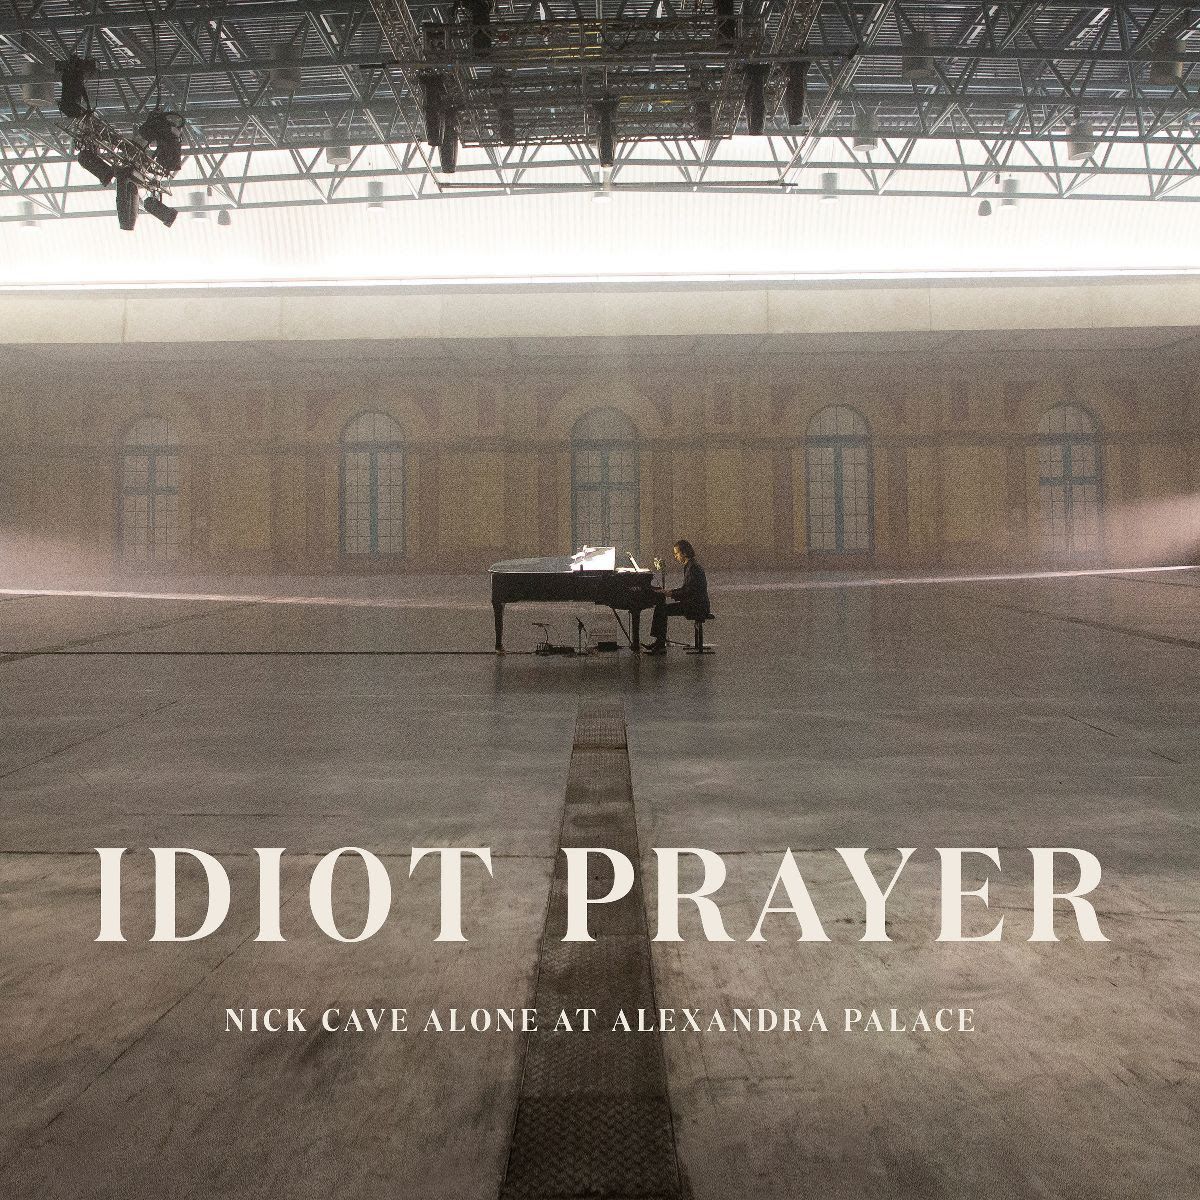 Idiot Prayer by Nick Cave album artwork cover art